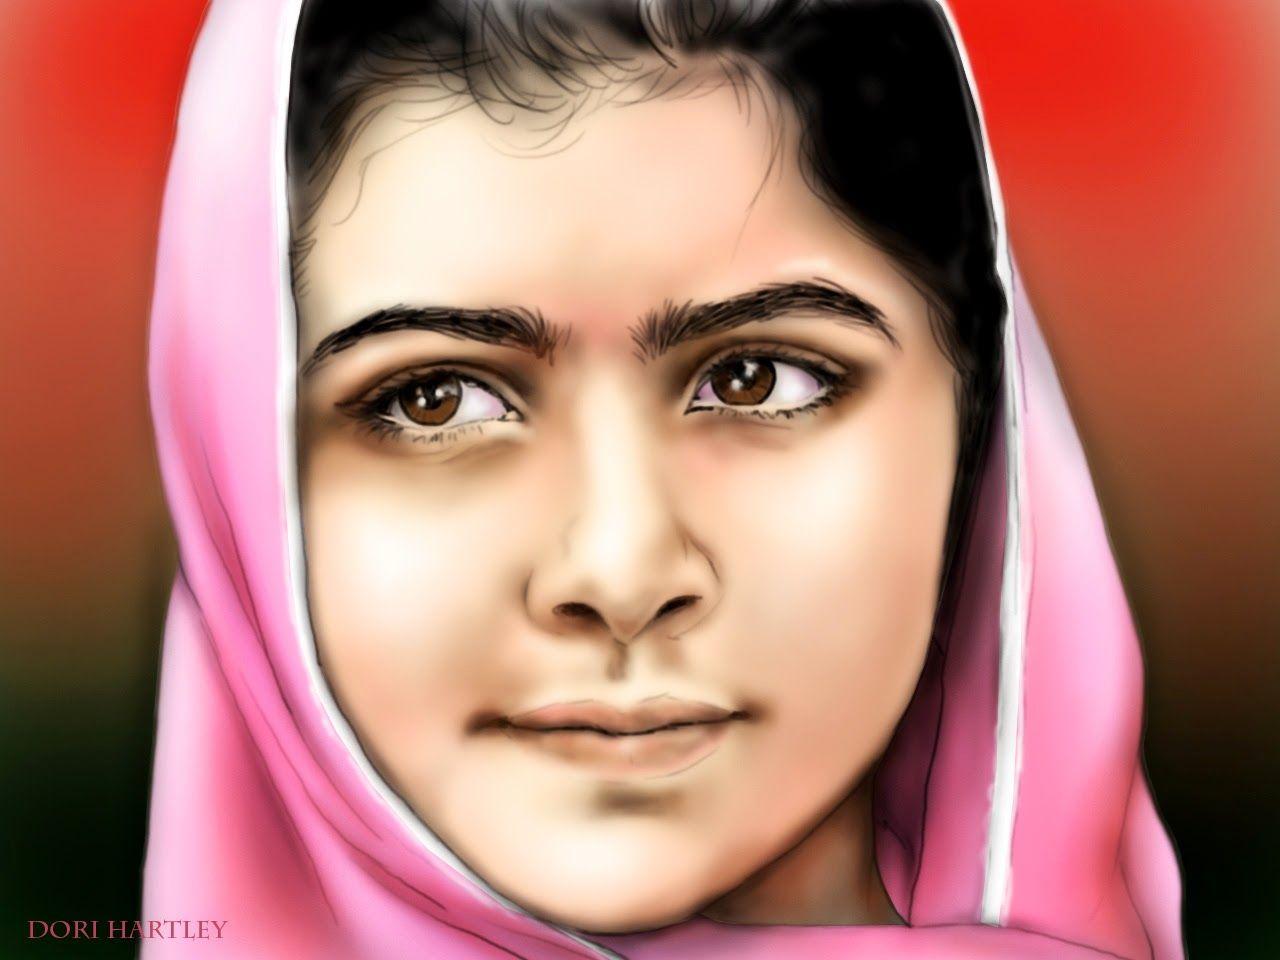 2048x1152px Malala Yousafzai 330.94 KB